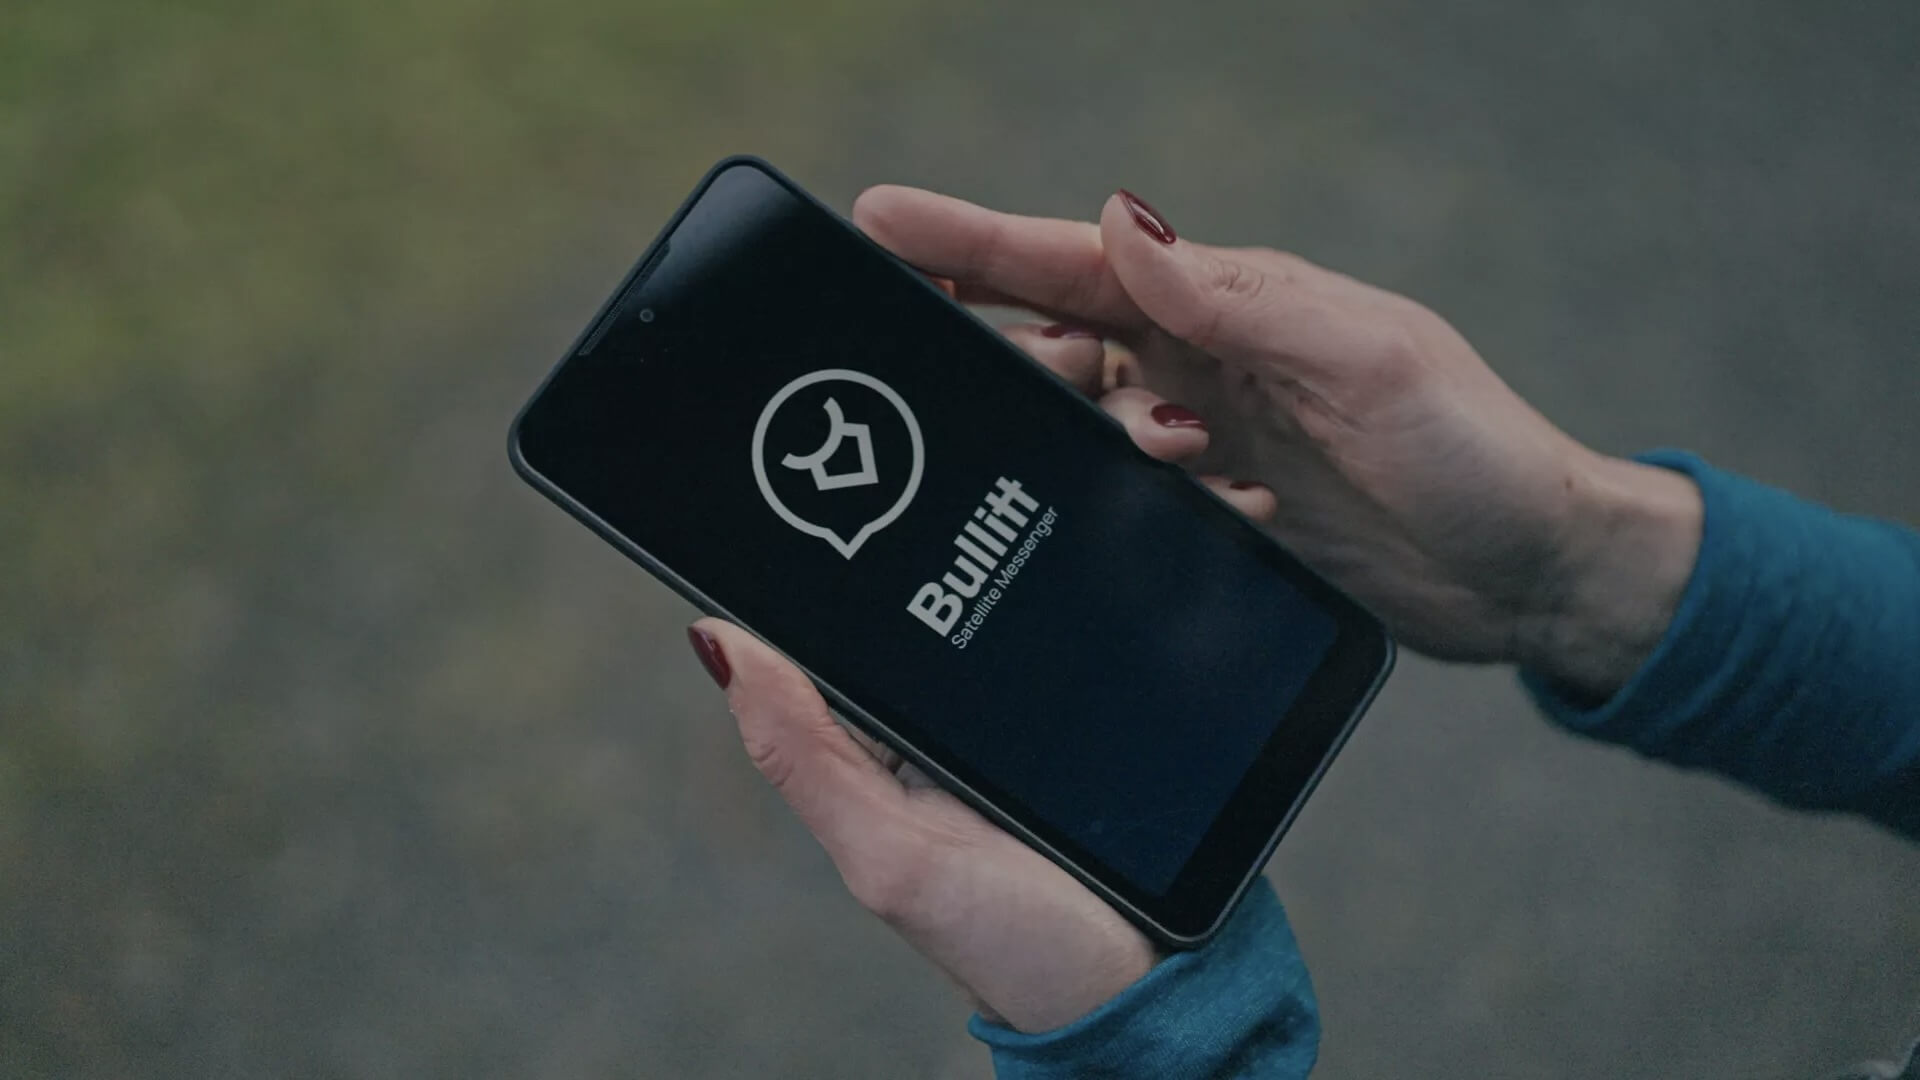 Motorola представила Android-смартфон со спутниковым мессенджером